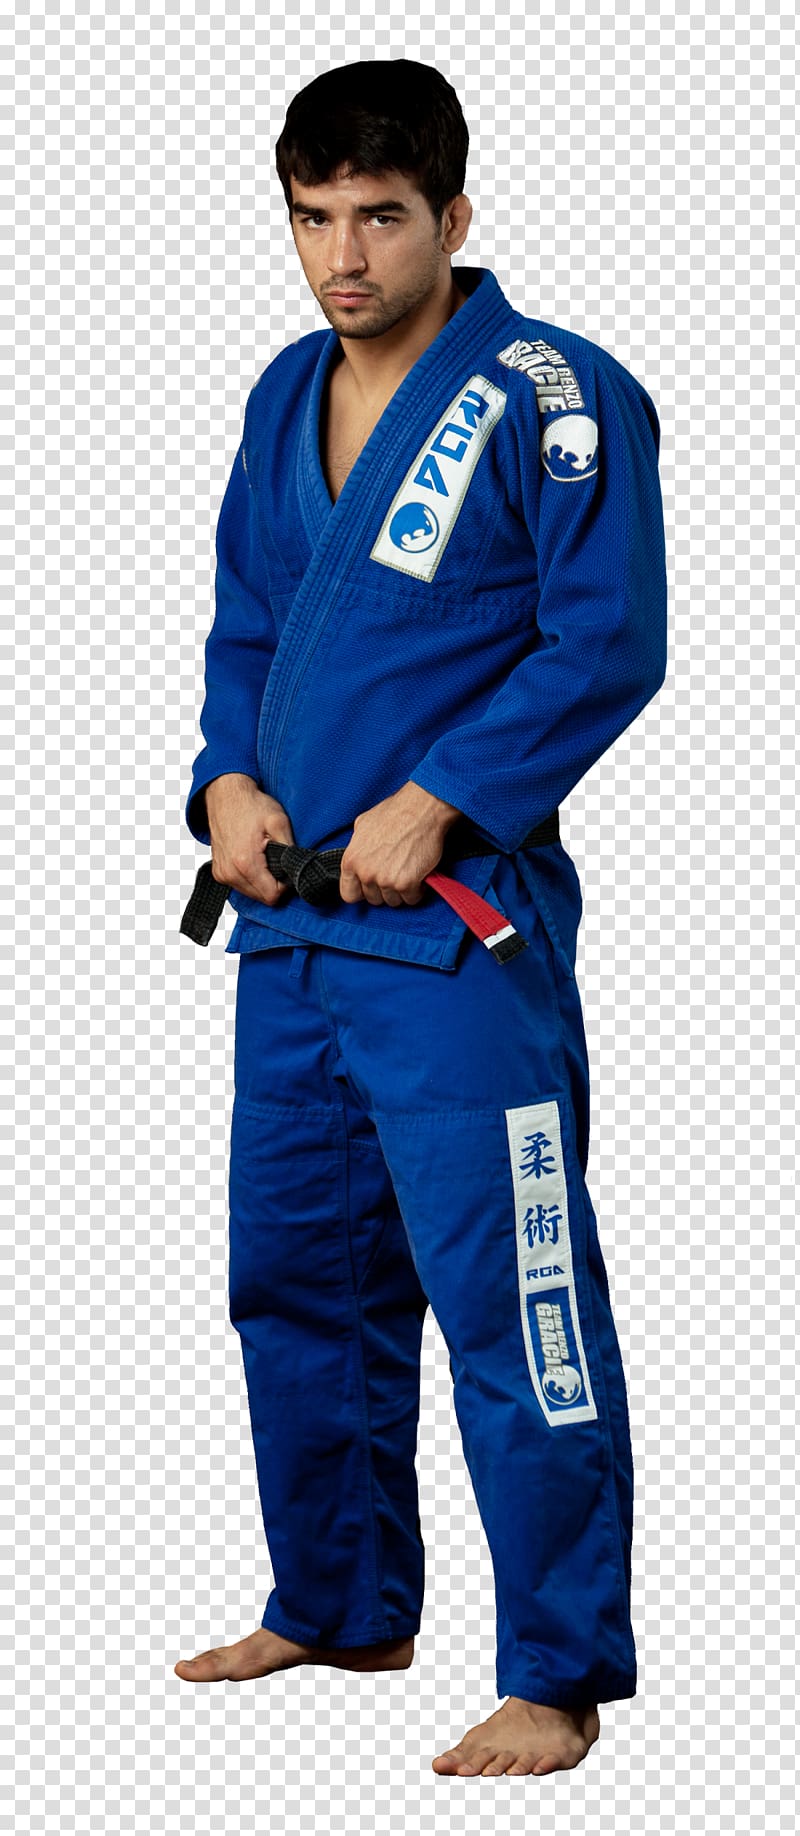 Renzo Gracie Clothing Uniform Costume Pants, judo transparent background PNG clipart